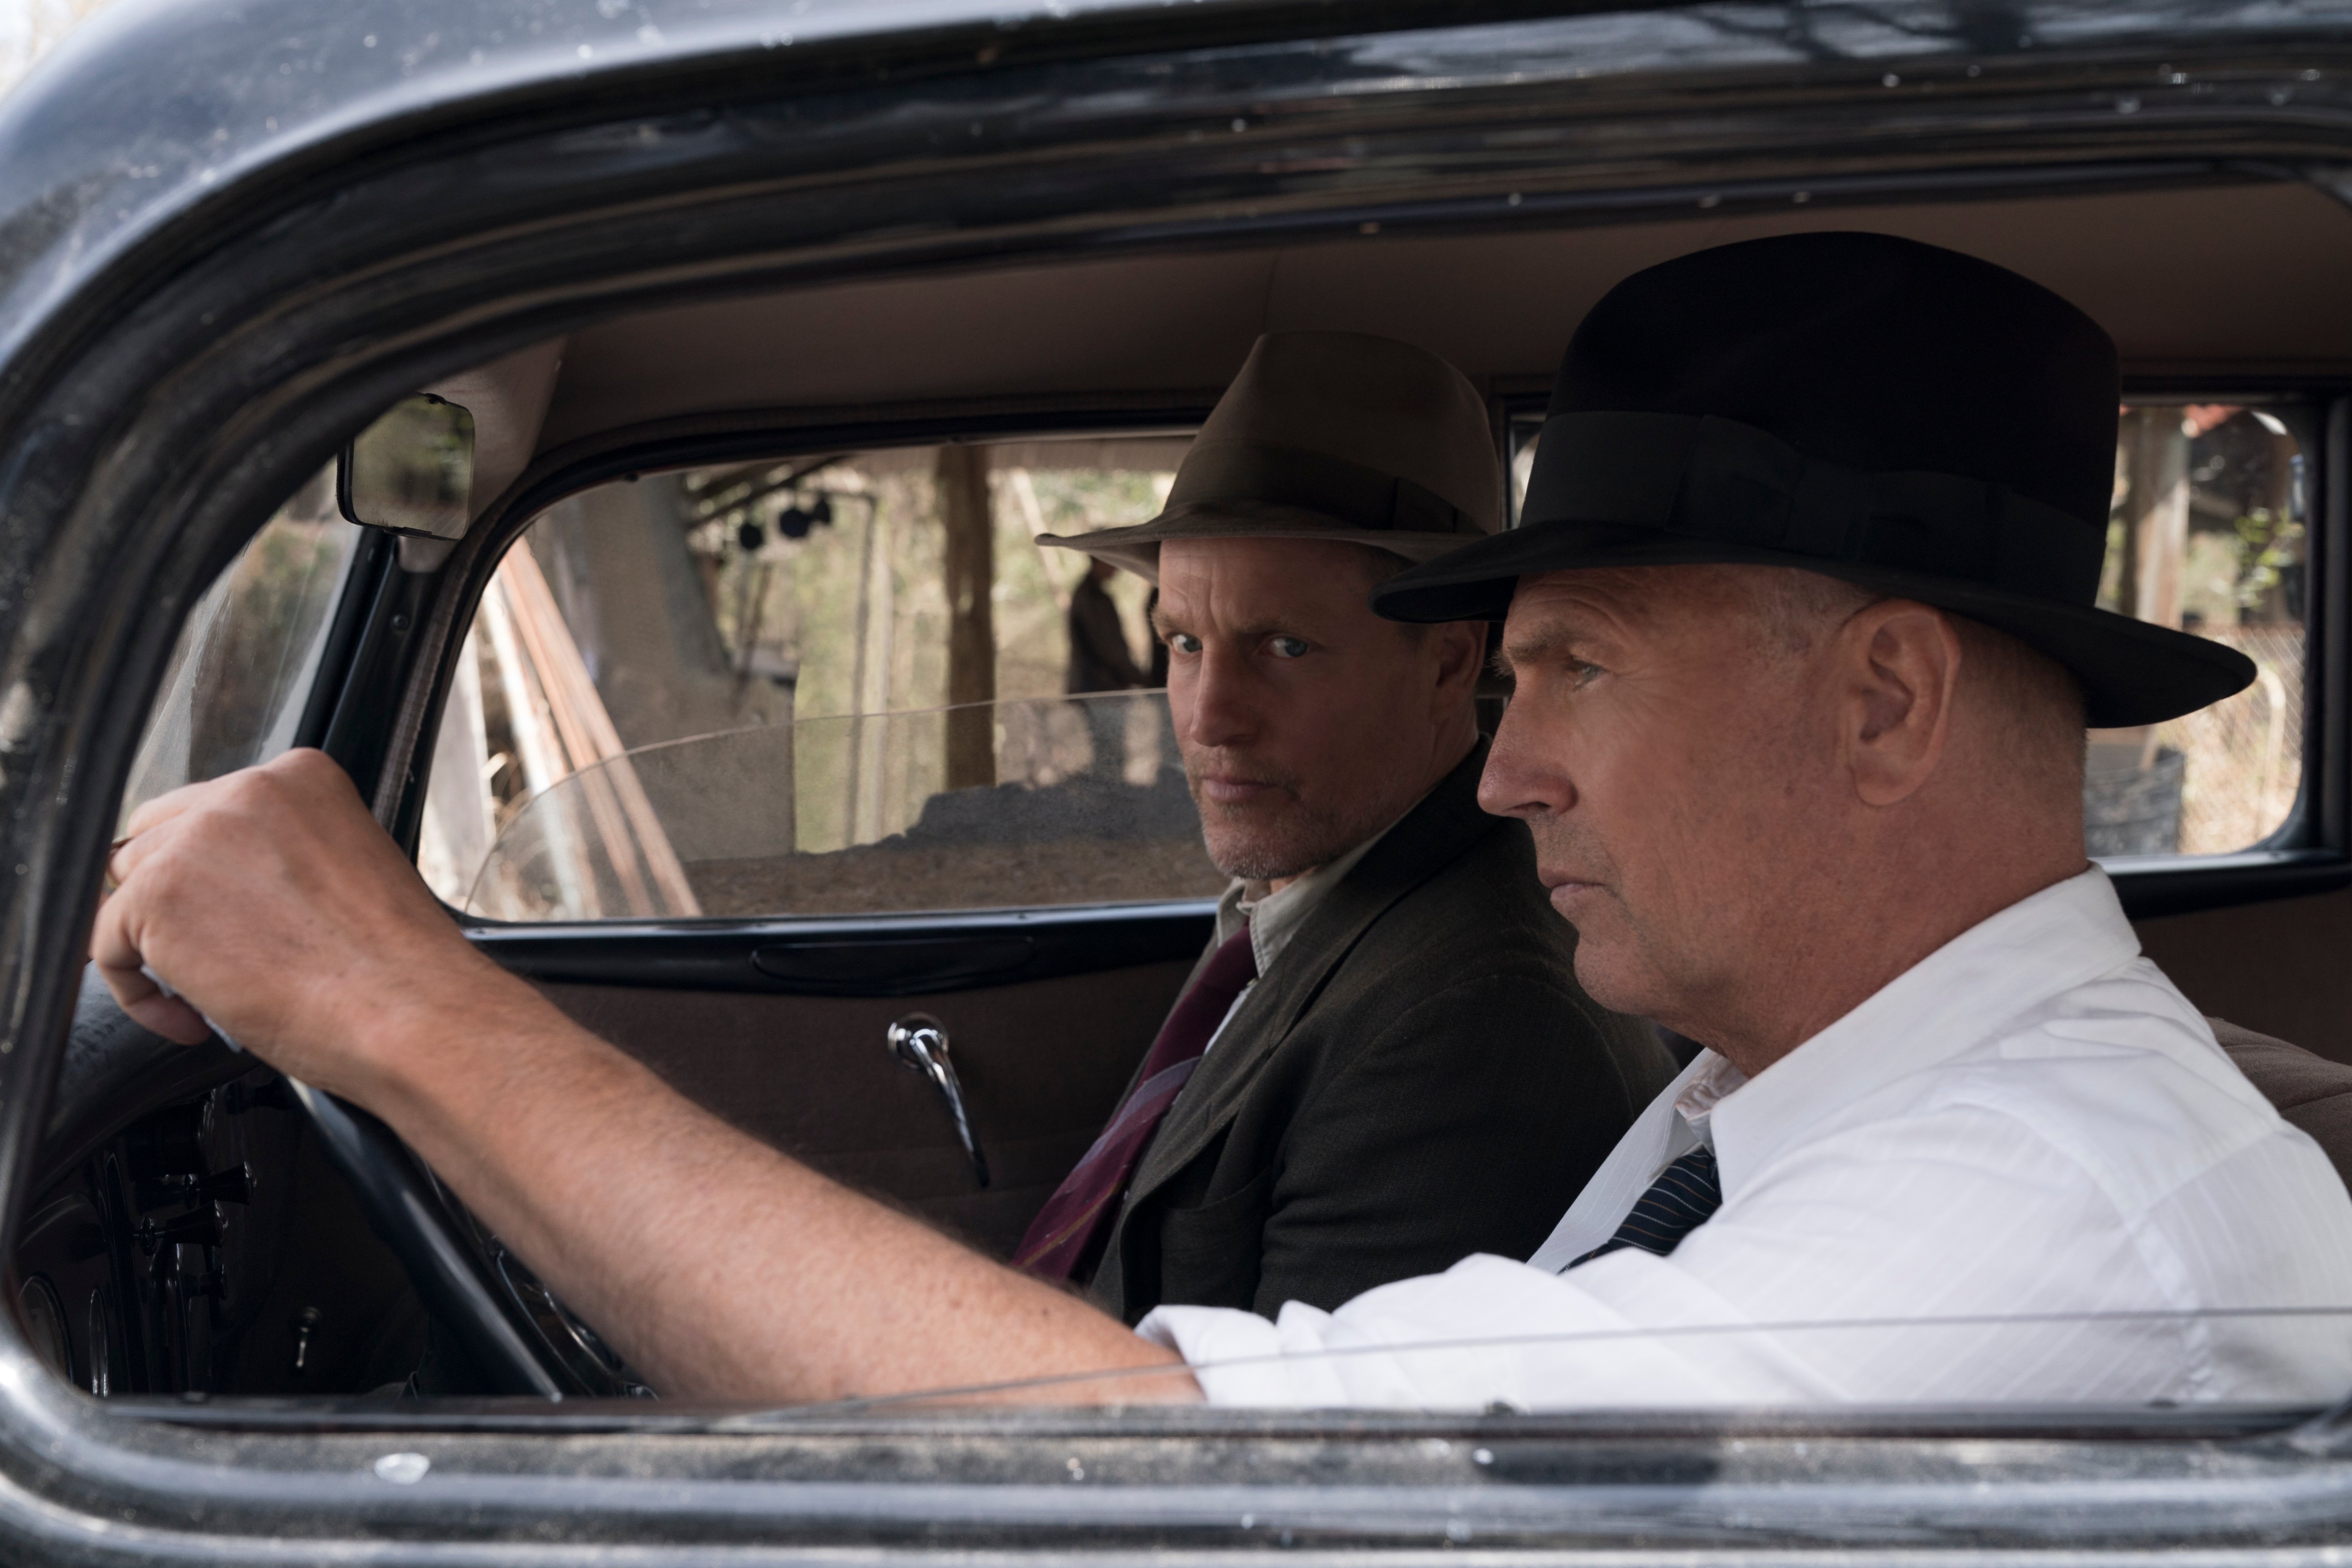 Woody Harrelson, left and Kevin Costner in "The Highwaymen" on Netflix. (Hilary B Gayle/SMPSP)